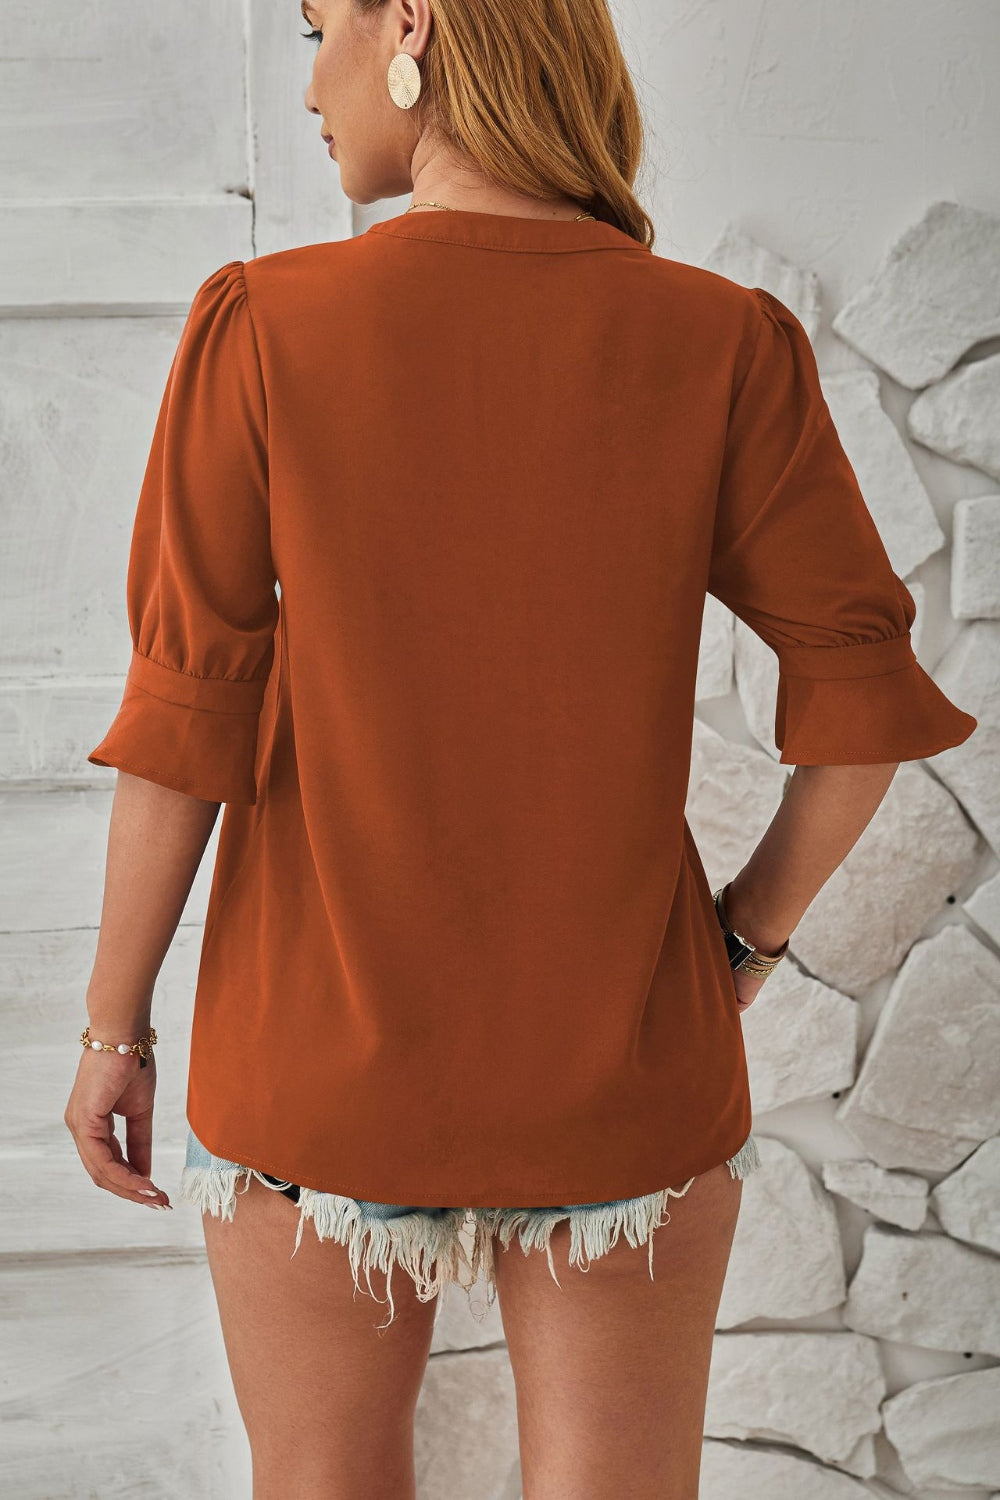 Chic Notched Half Sleeve Blouse: Stylish Fashion Staple for Versatile Wardrobe Pairings!